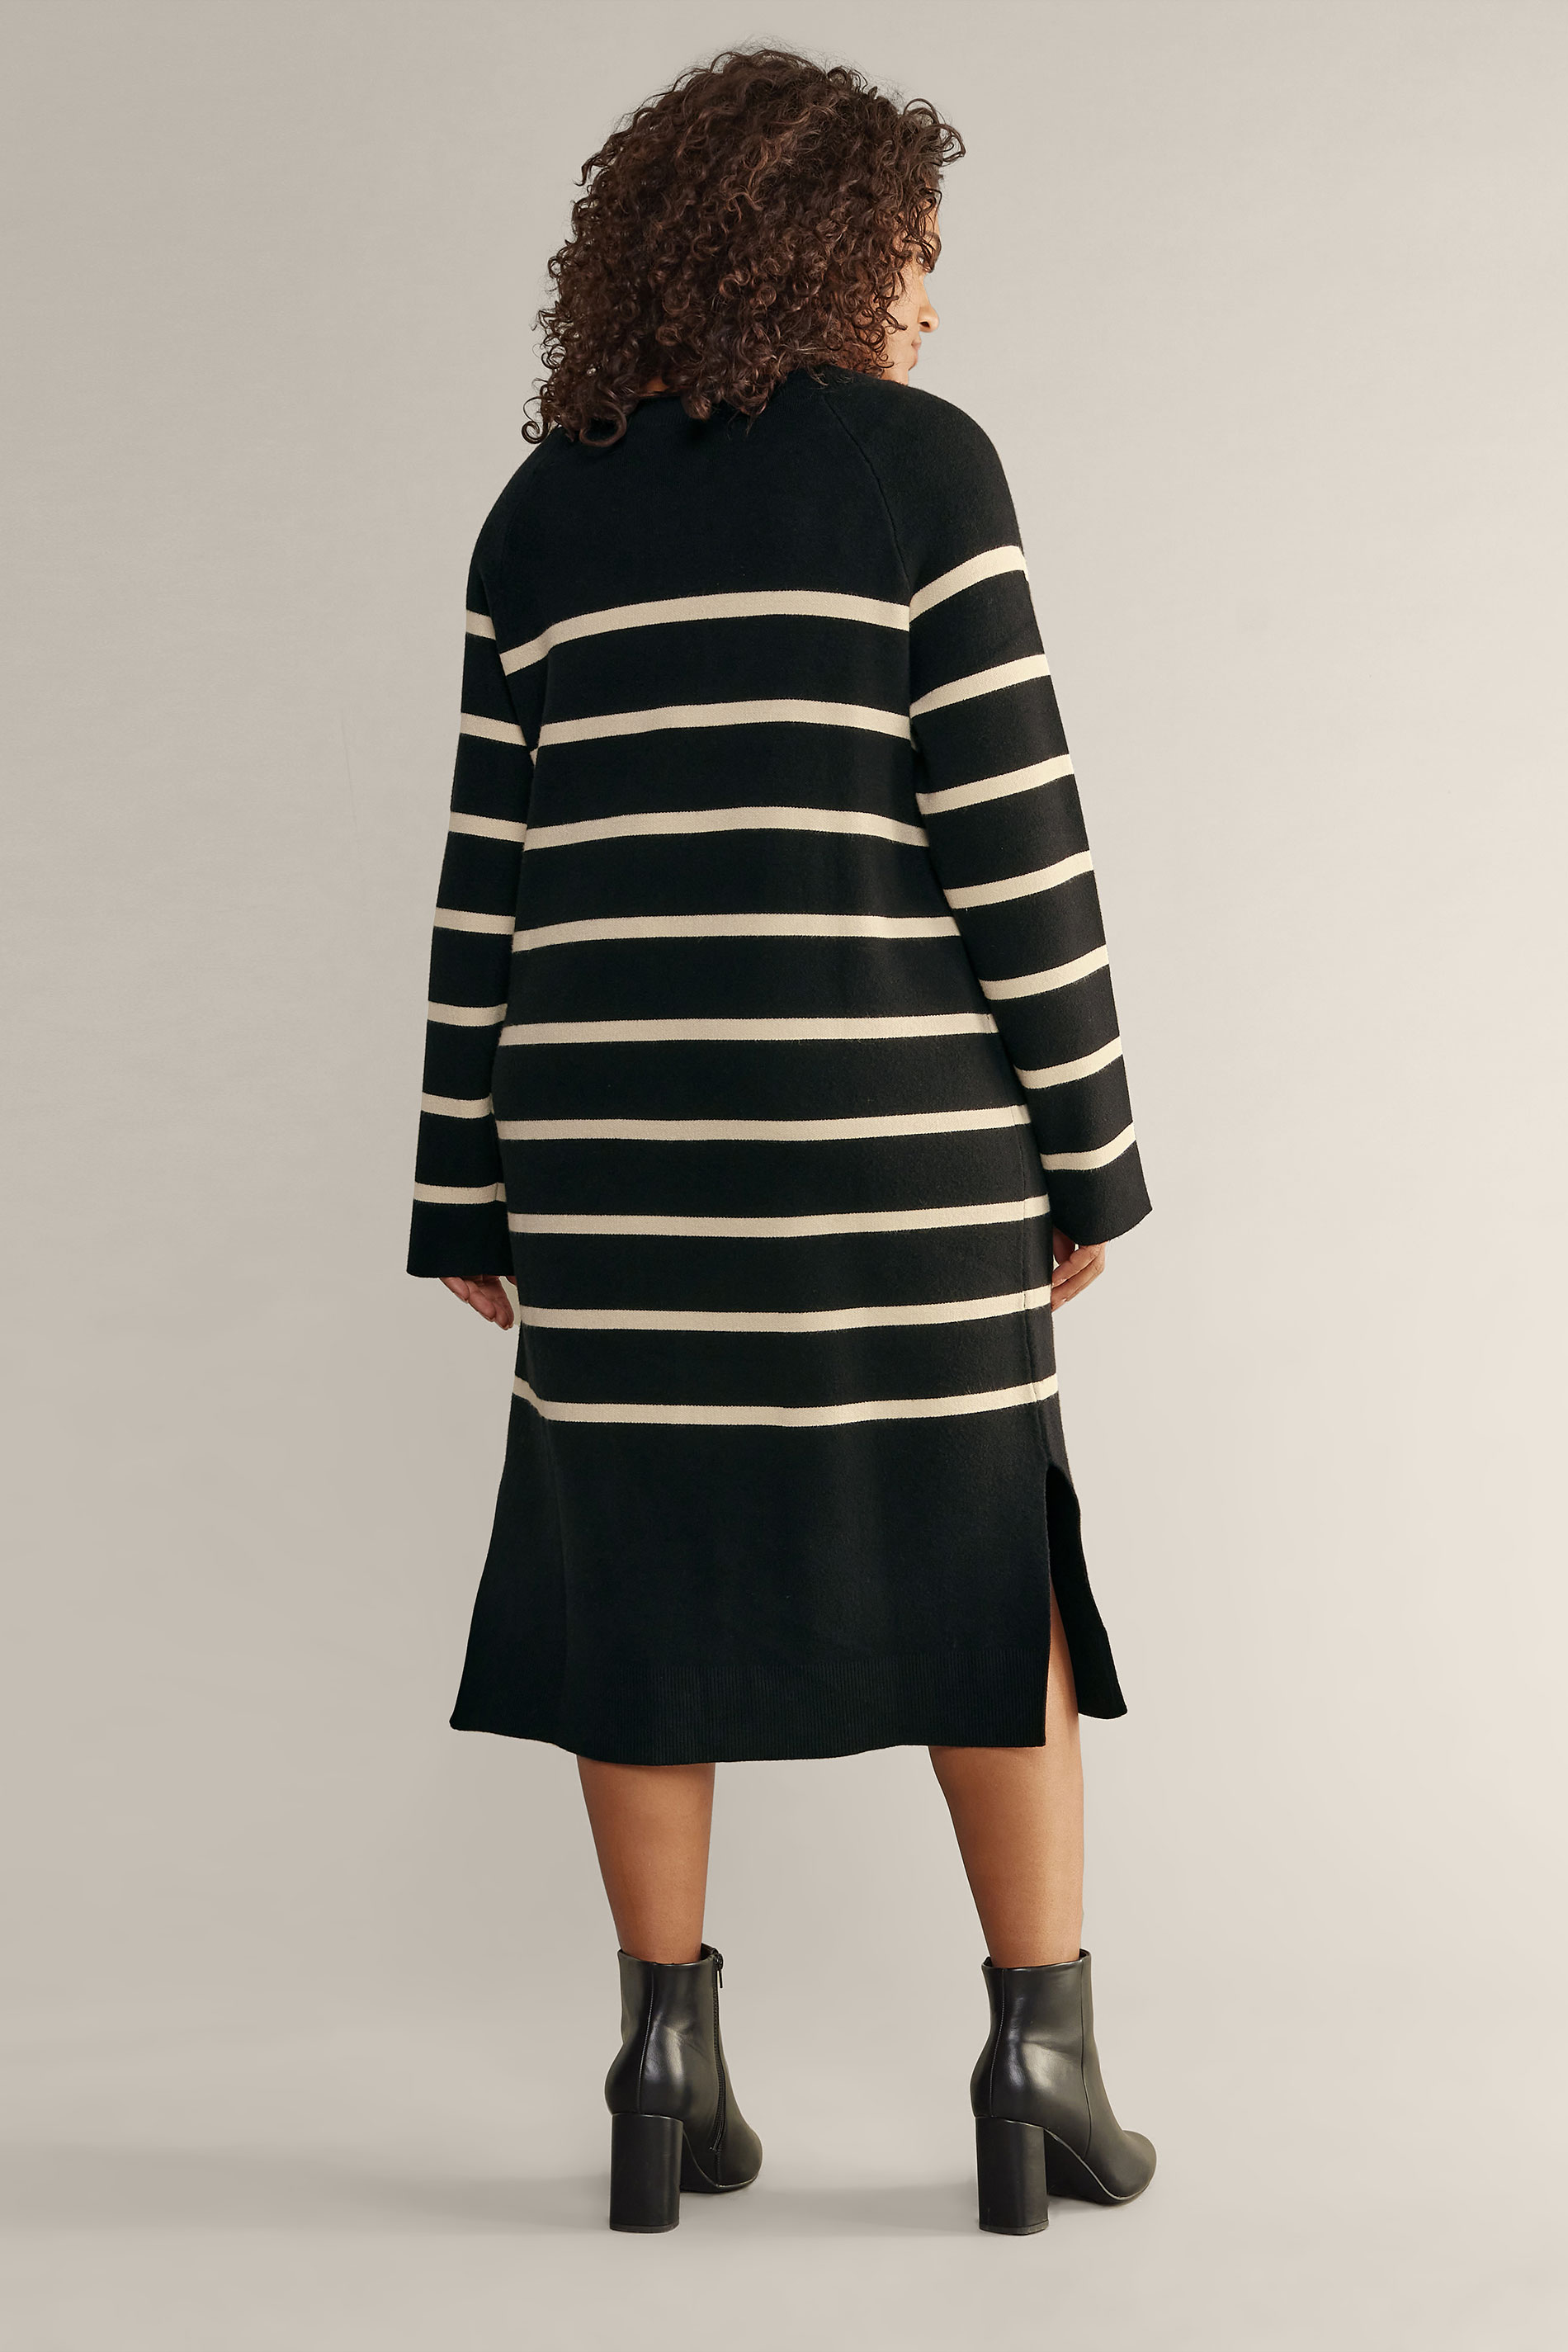 EVANS Plus Size Black & Ivory White Striped Knitted Jumper Dress | Evans 3